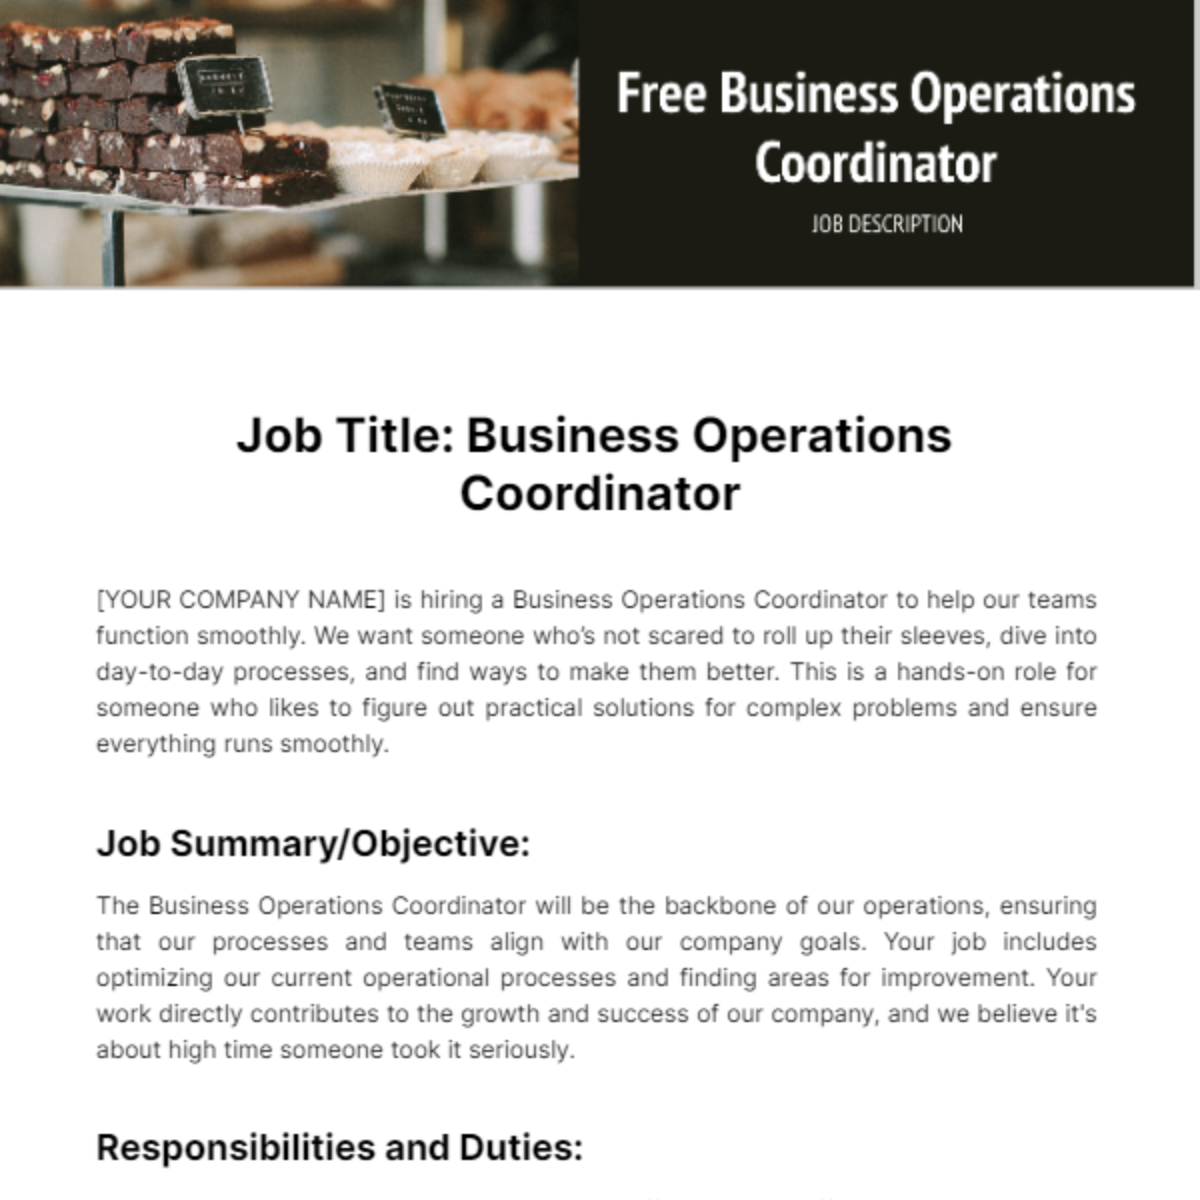 Free Business Operations Coordinator Job Description Template